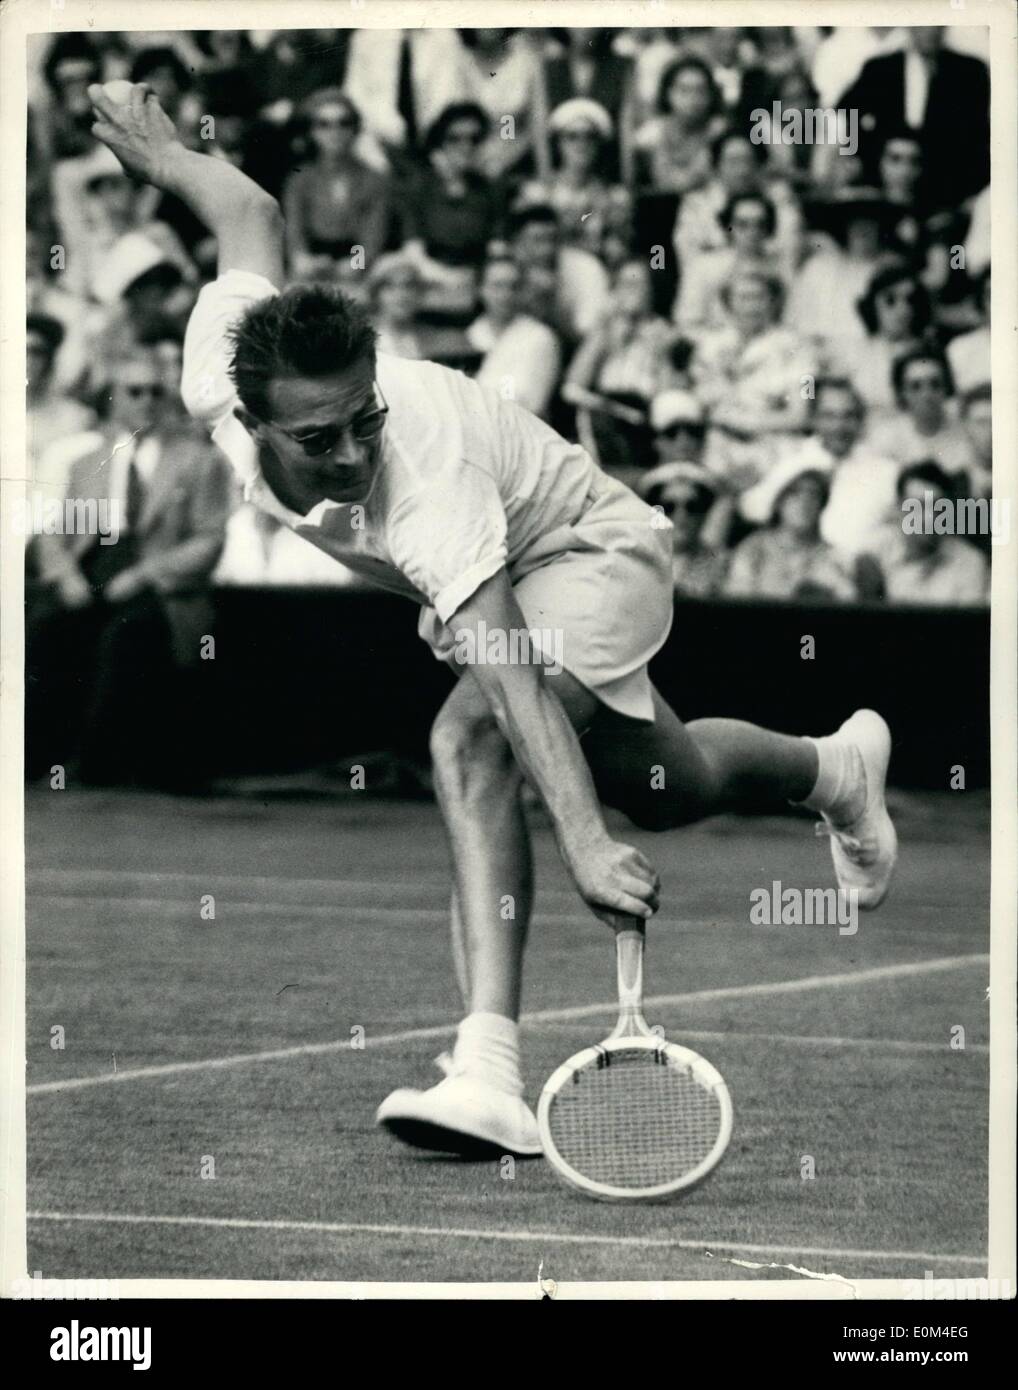 Jun. 25, 1953 - 25-6-53 Drobny v Patty - Tennis at Wimbledon. Keystone Photo Shows: J. Drobny (Egypt), seen in action during his match against Budge Patty (U.S.A.) at Wimbledon today. Stock Photo